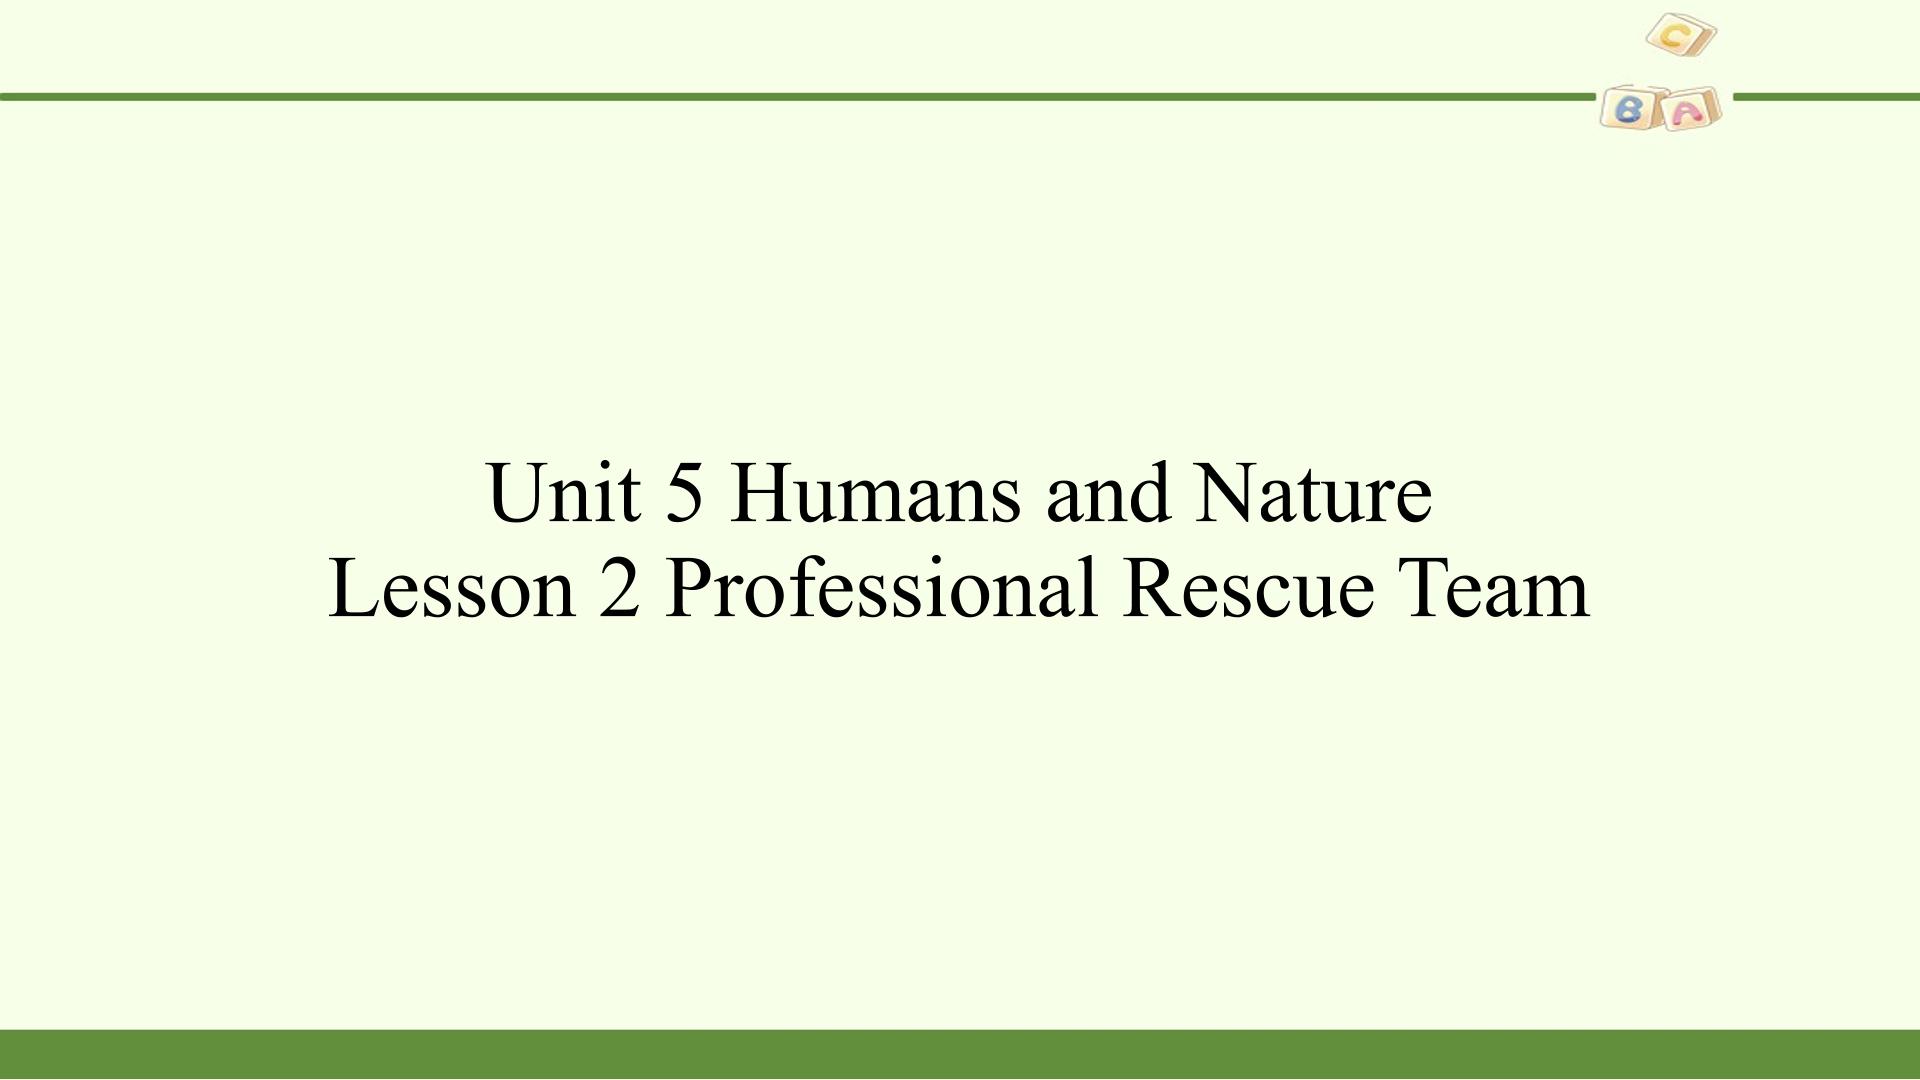 Lesson 2 Professional Rescue Team